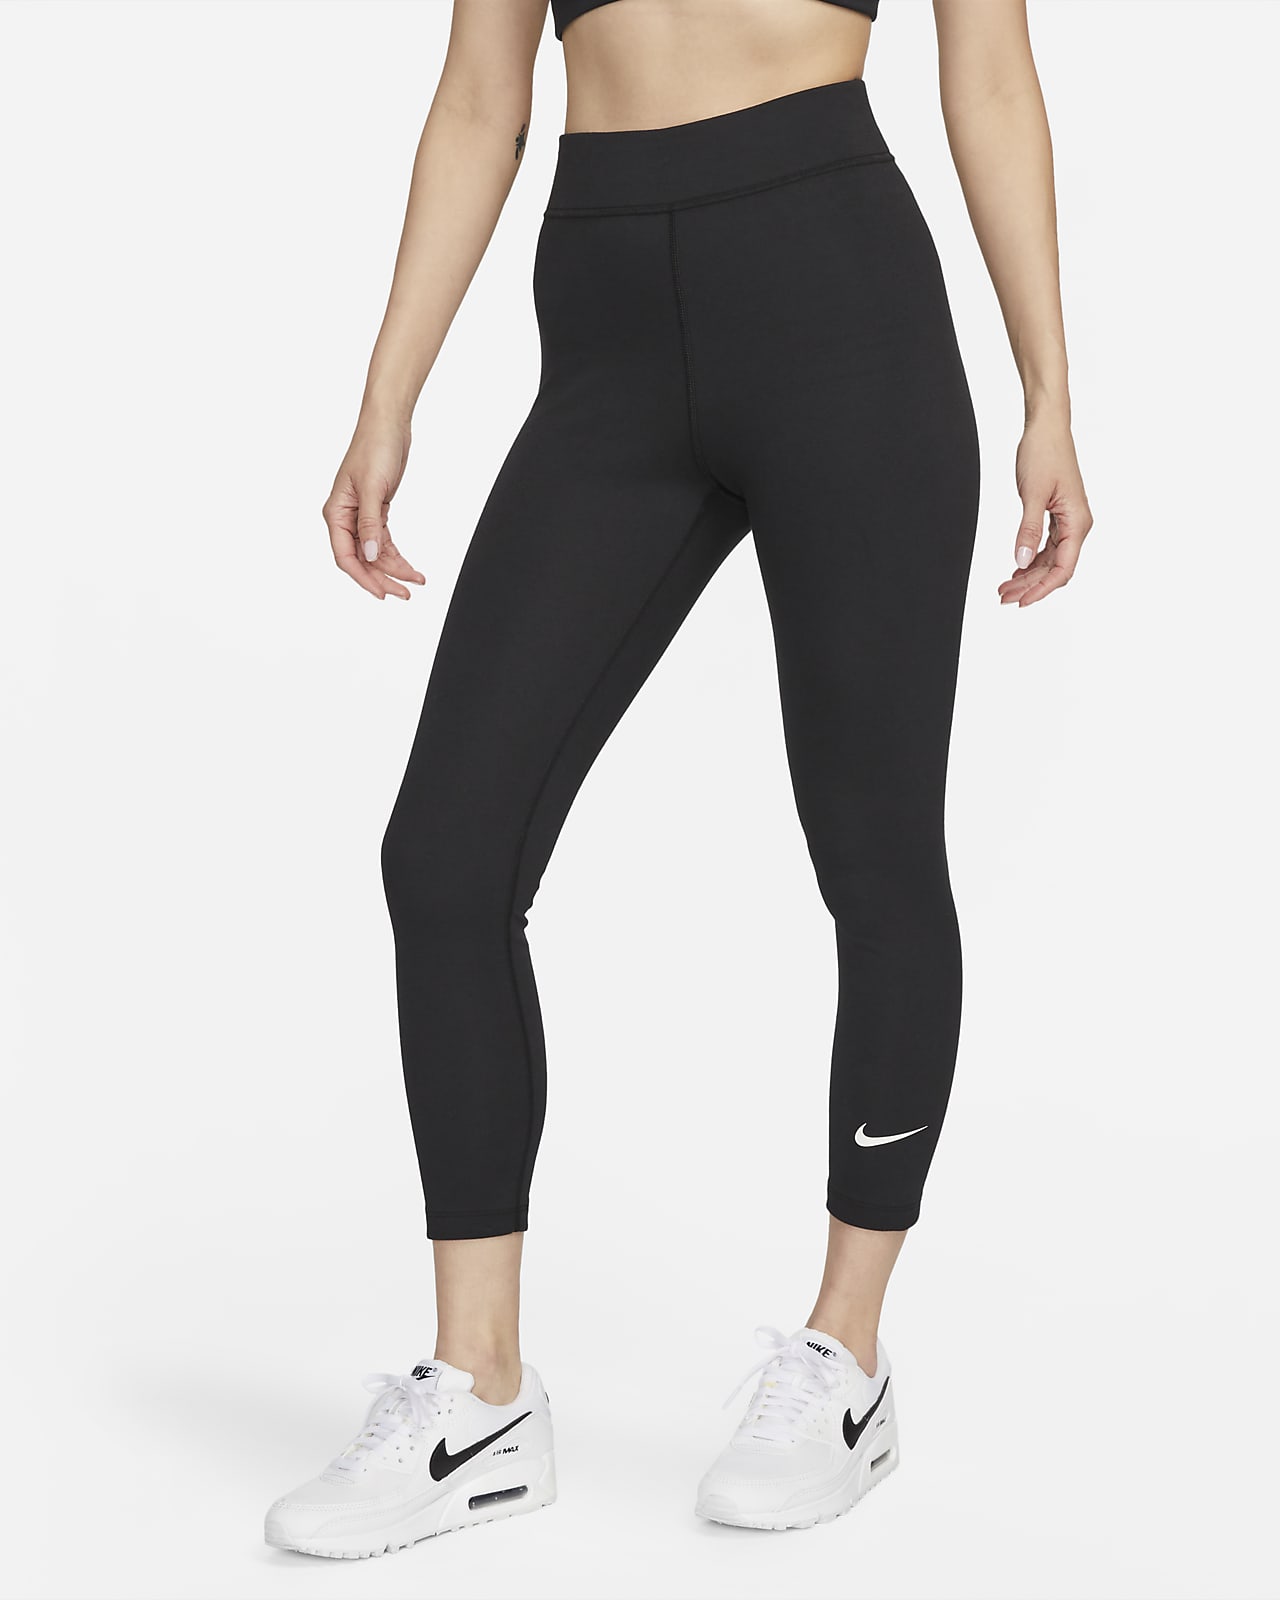 Original Nike Women's Sportswear Gingham High-Rise 7/8 Tights - Black,  Women's Fashion, Activewear on Carousell